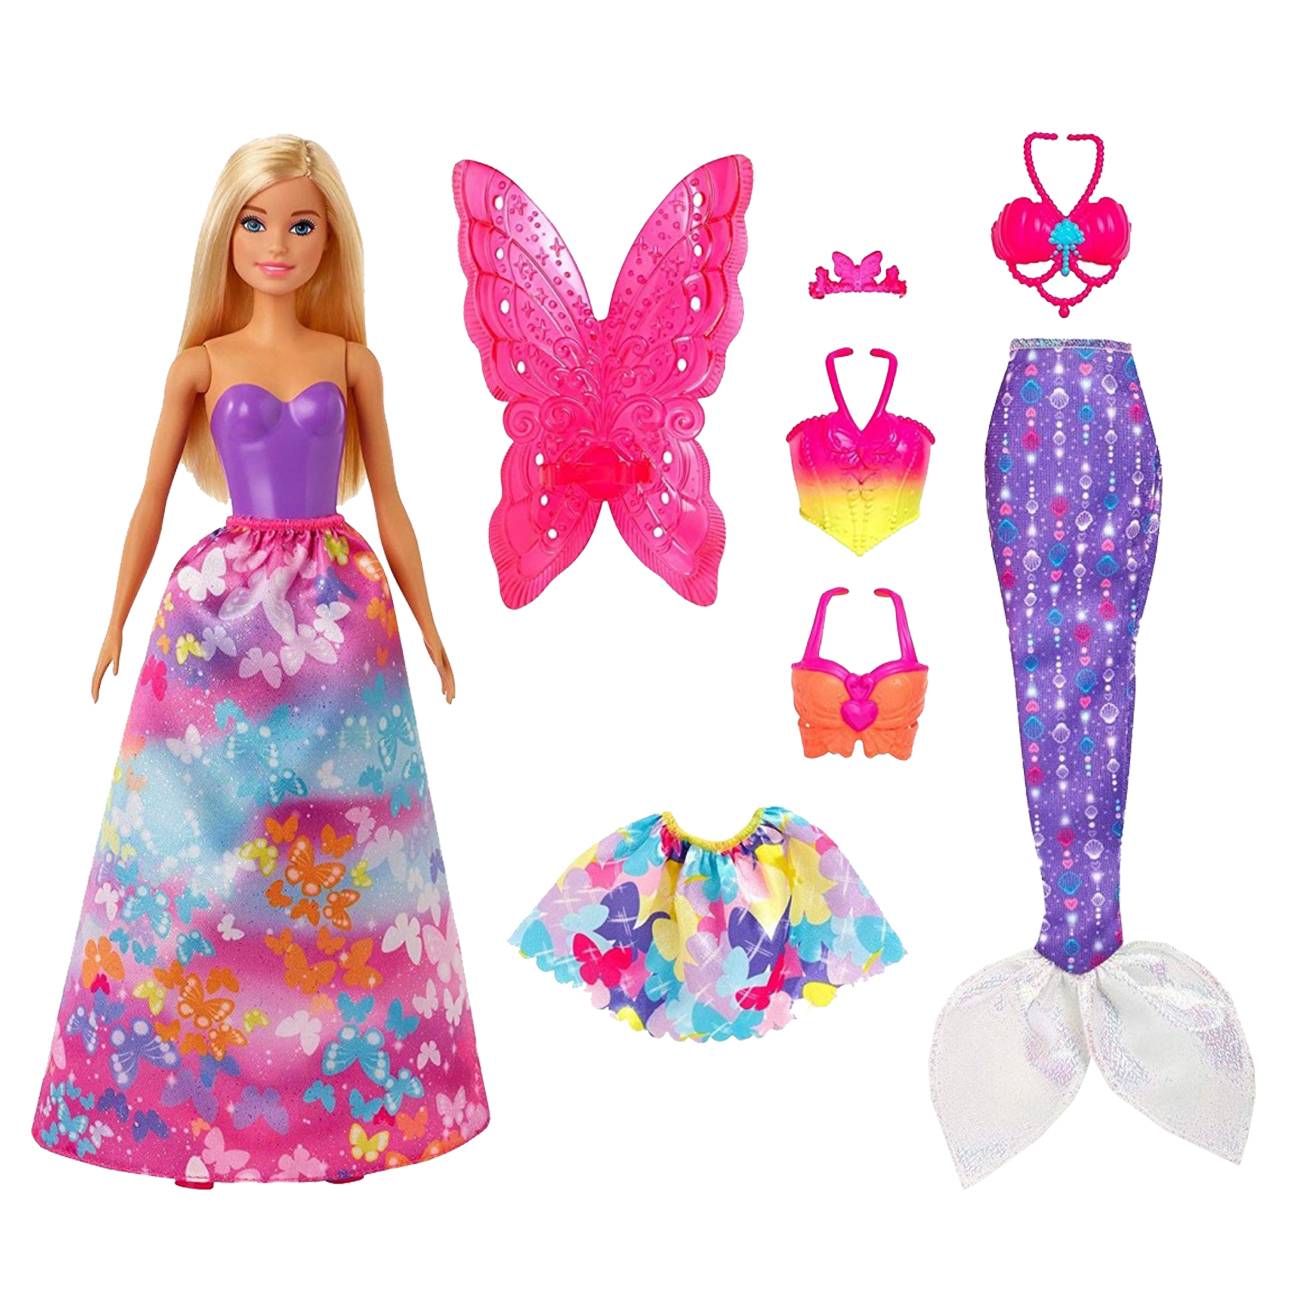 Barbie Dreamtopia Dress Up Gift Set bestvalue.eu